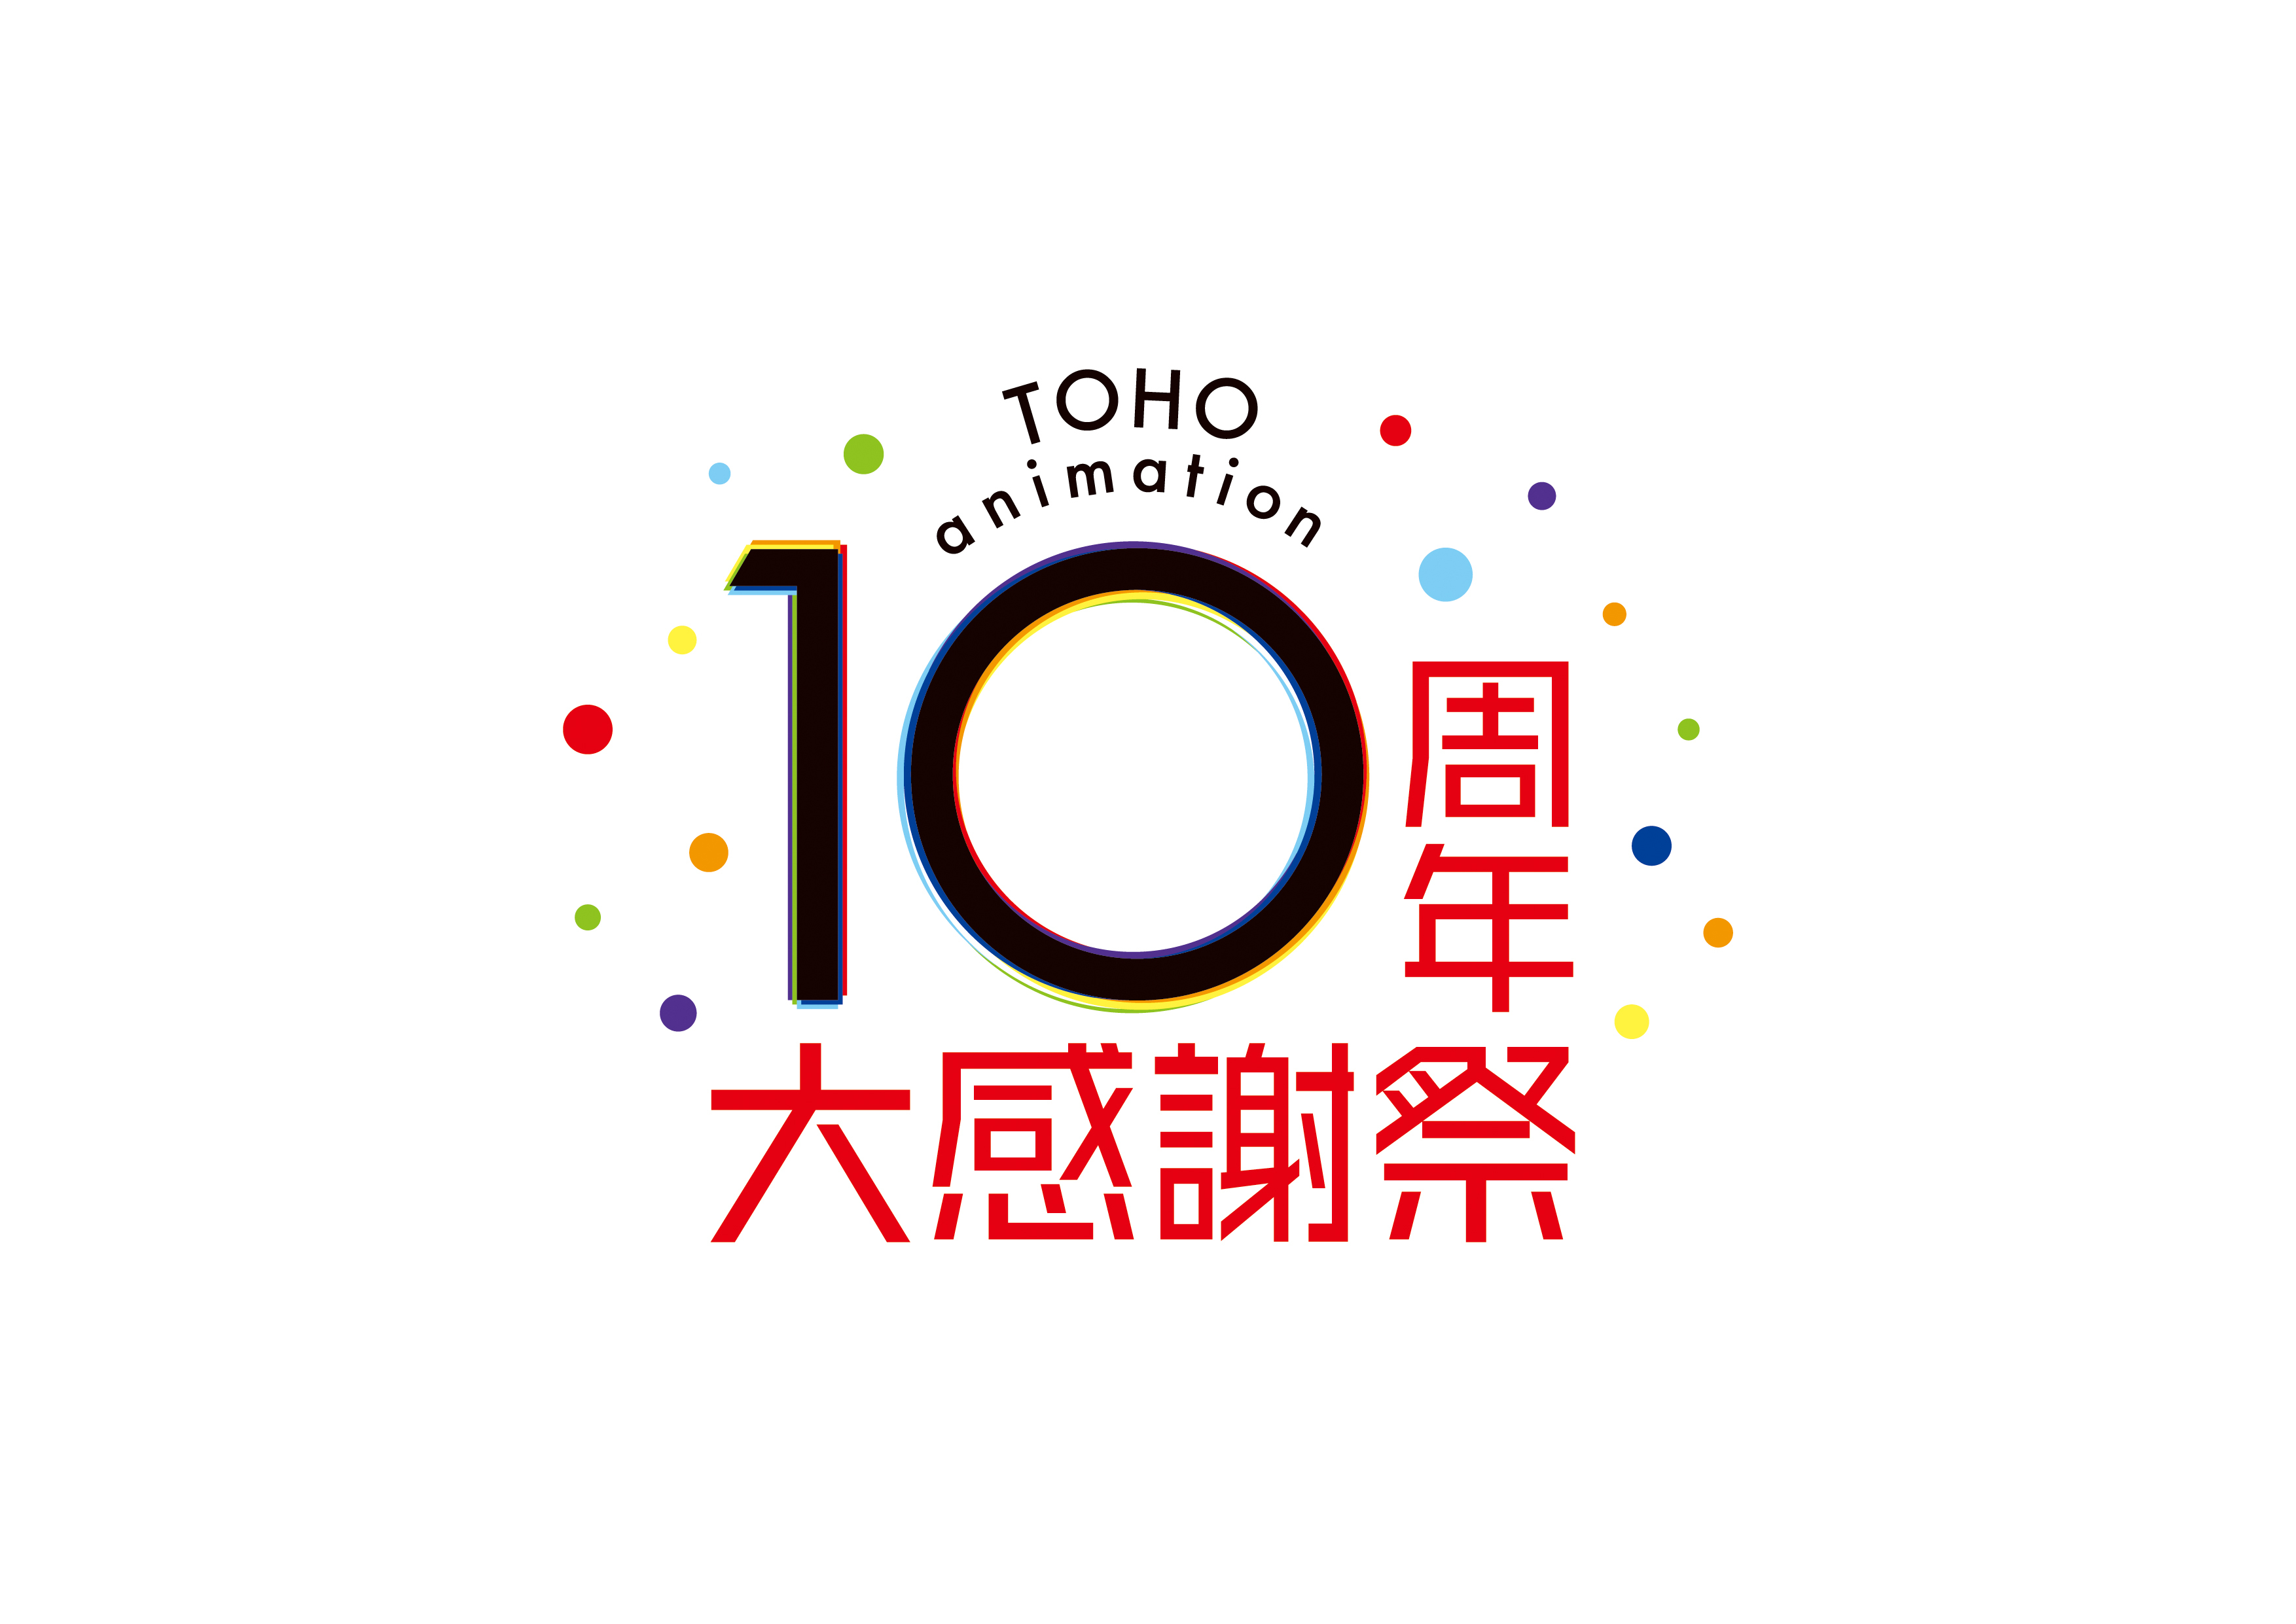 『TOHO animation 10周年大感謝祭』